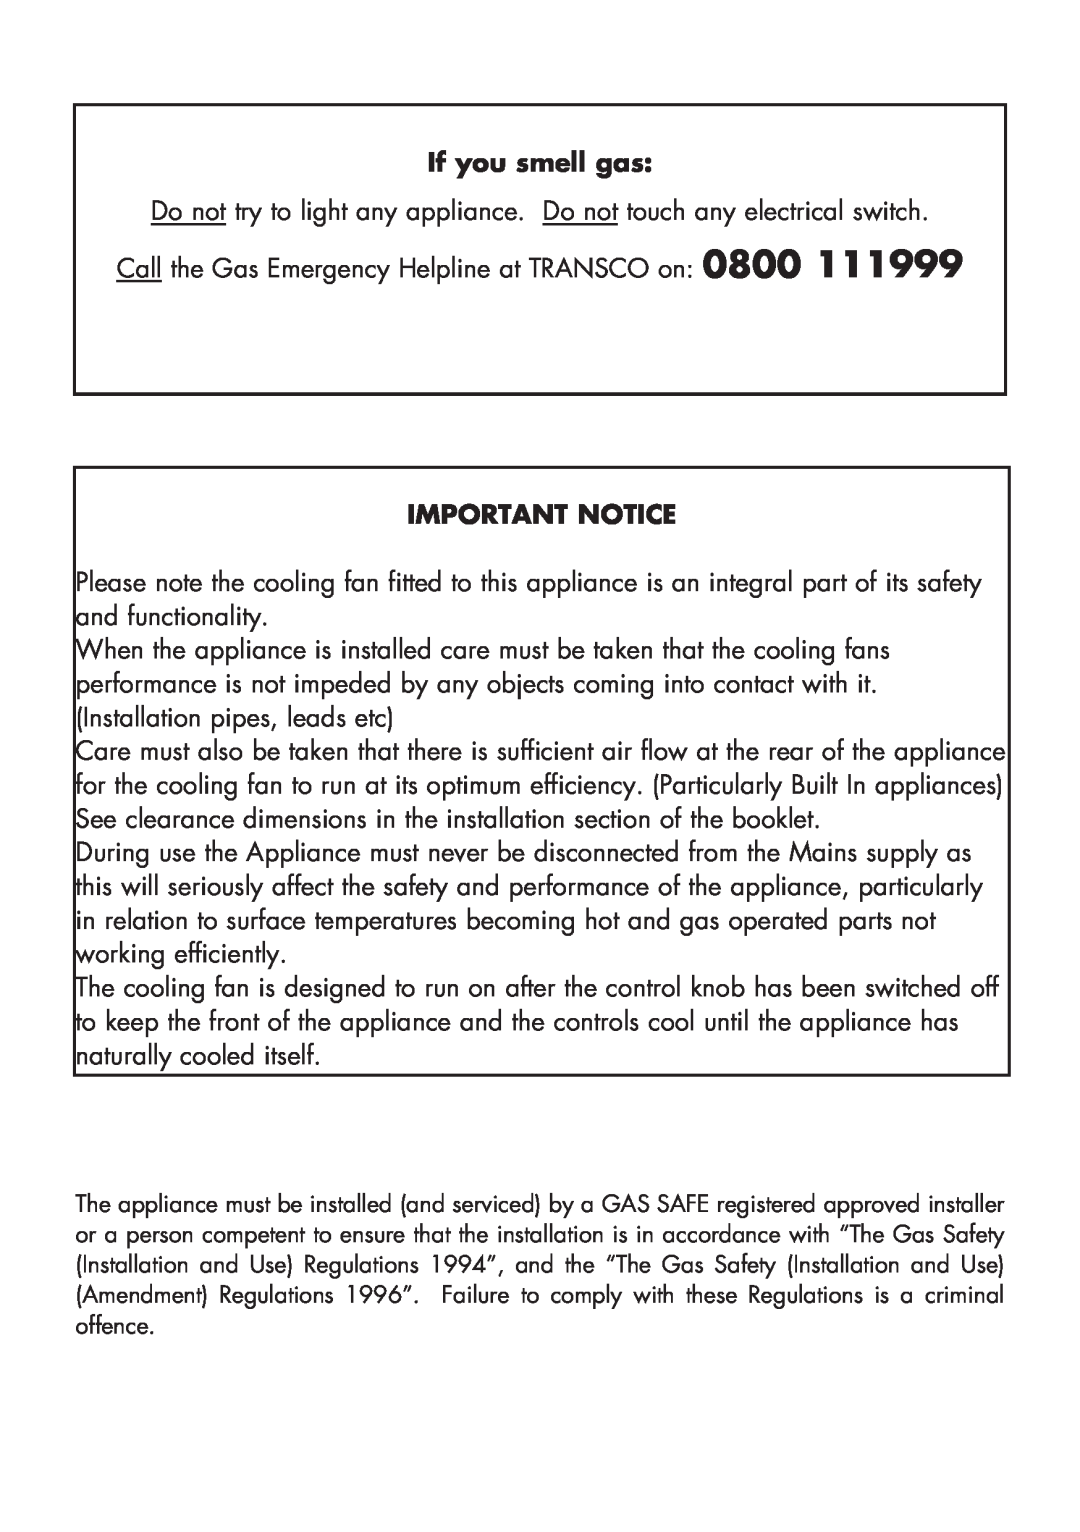 Glen Dimplex Home Appliances Ltd BI 70 G manual If you smell gas, Important Notice 